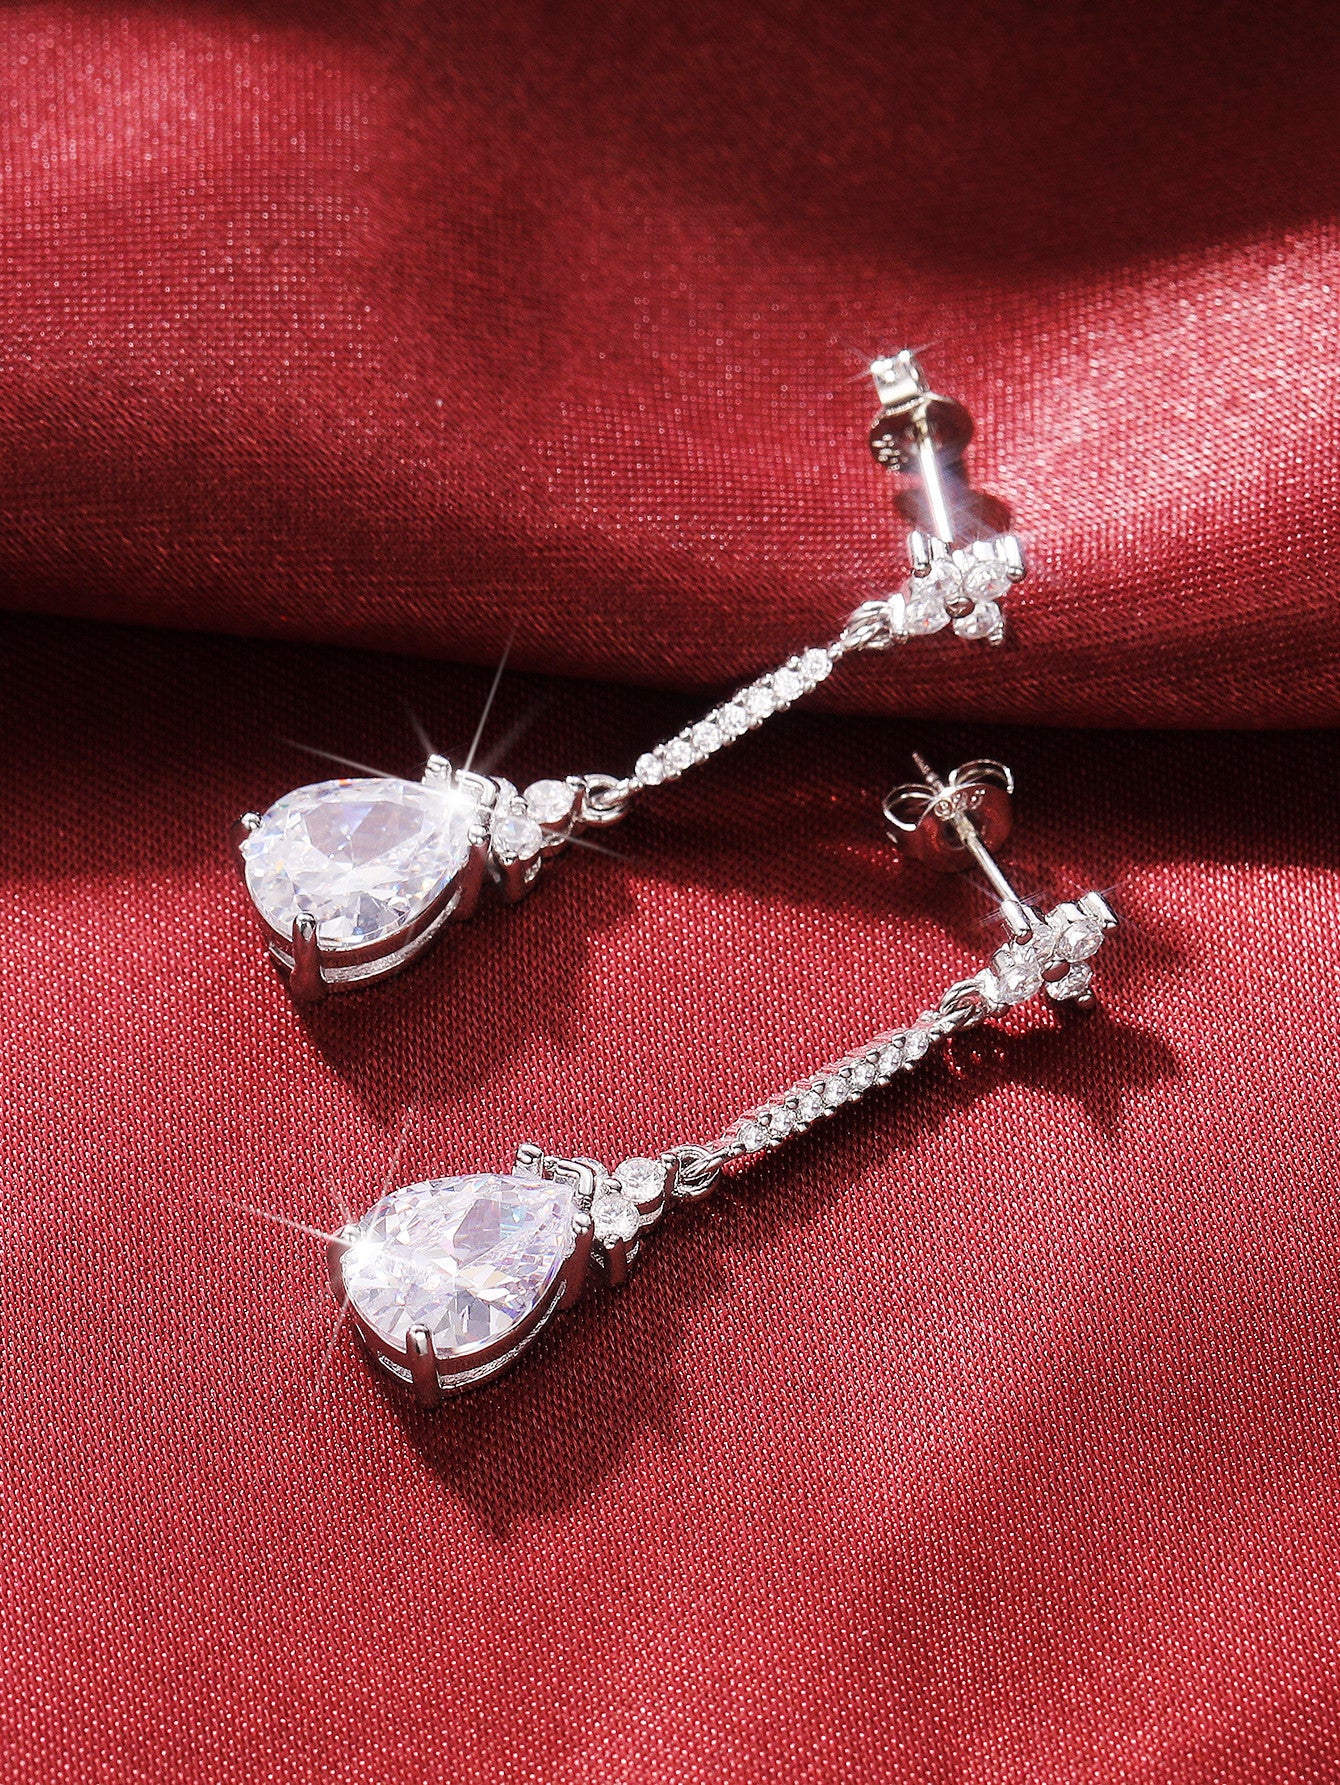 47.Shiny 3A white zircon pear-shaped water drop earrings for women, popular temperament versatile and elegant earrings